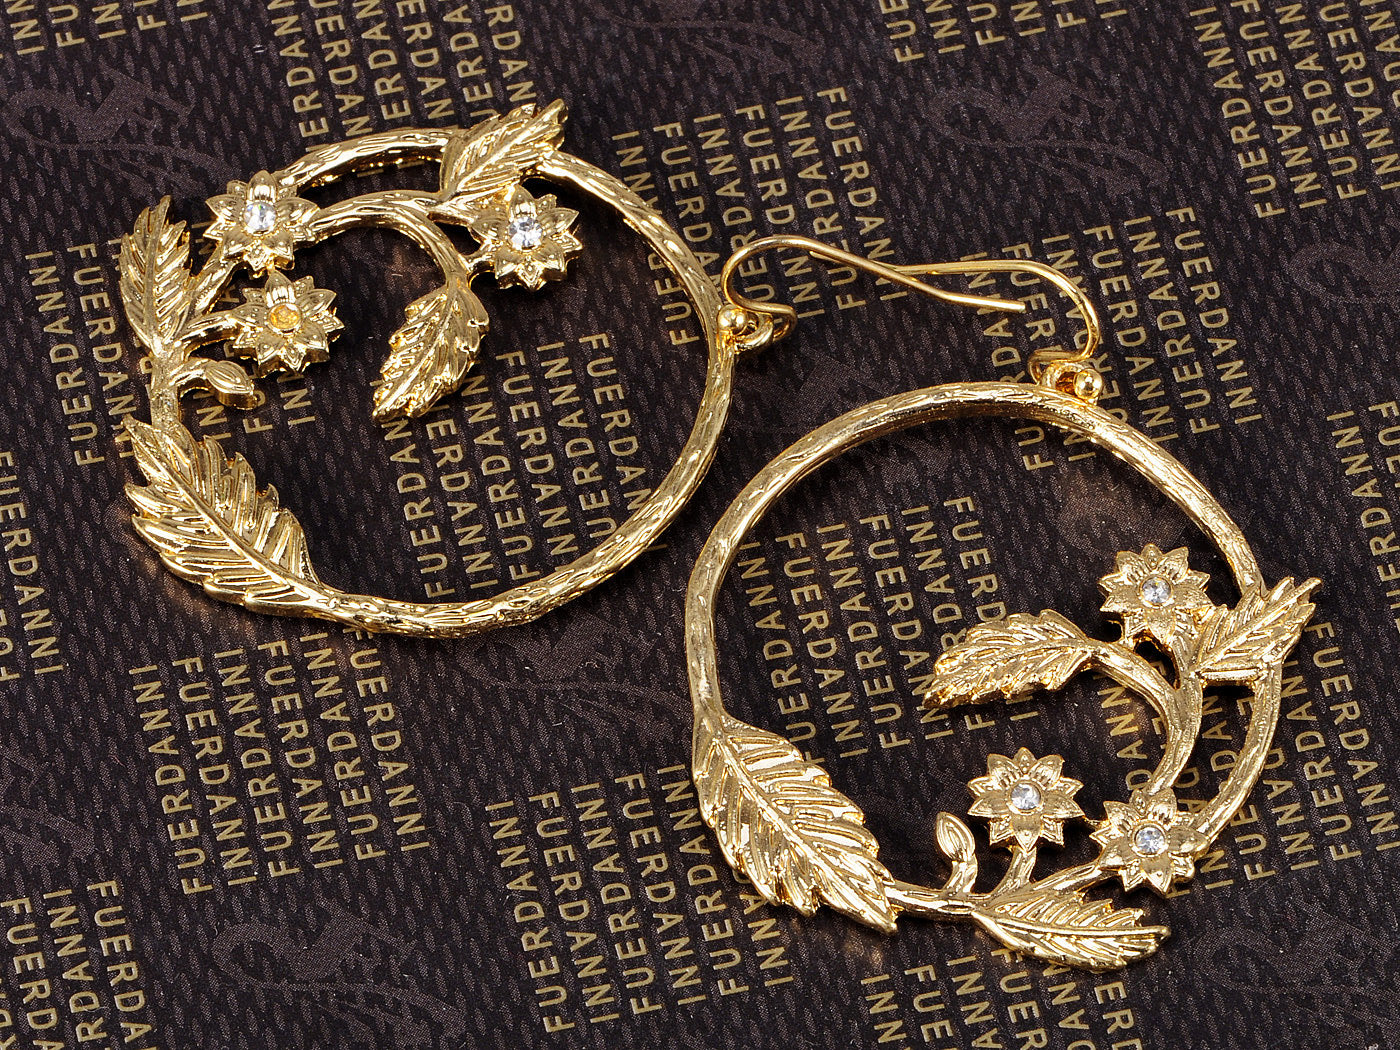 Bronze Flower And Leave Designed Dangle Earrings